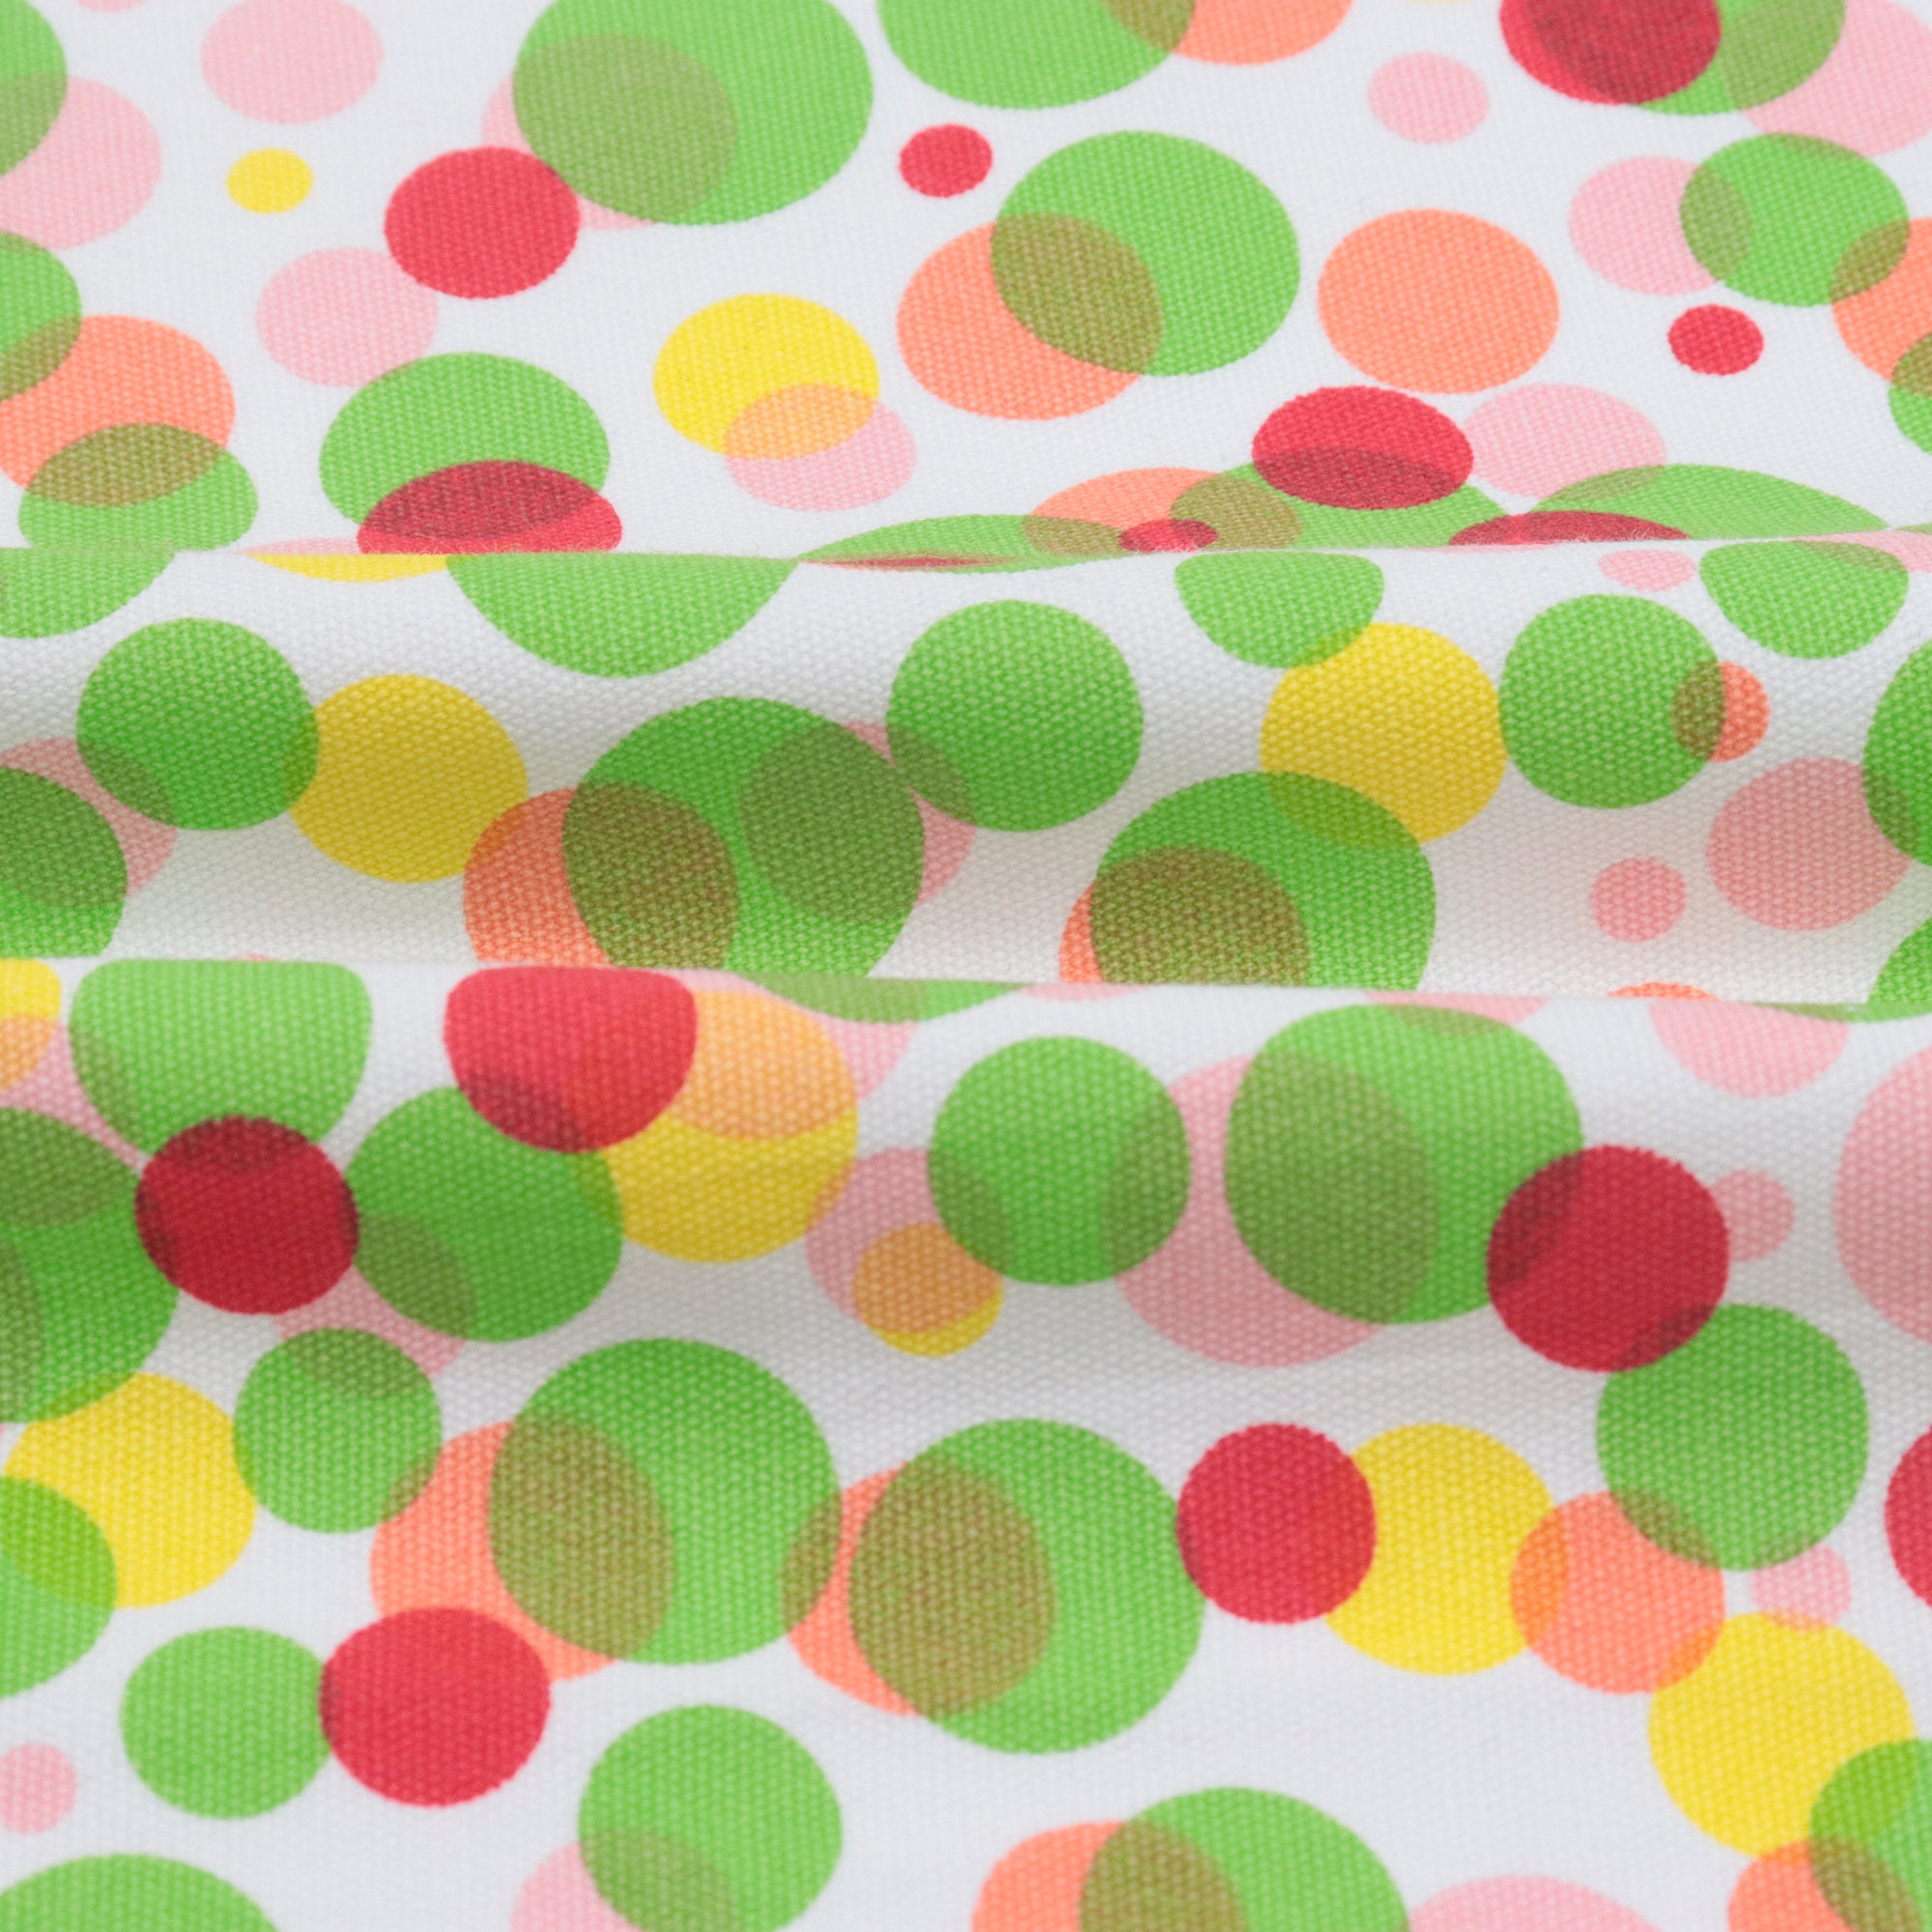 Water Slurry Printing Canvas Color Polka Dot Sofa Table Cloth | Etsy